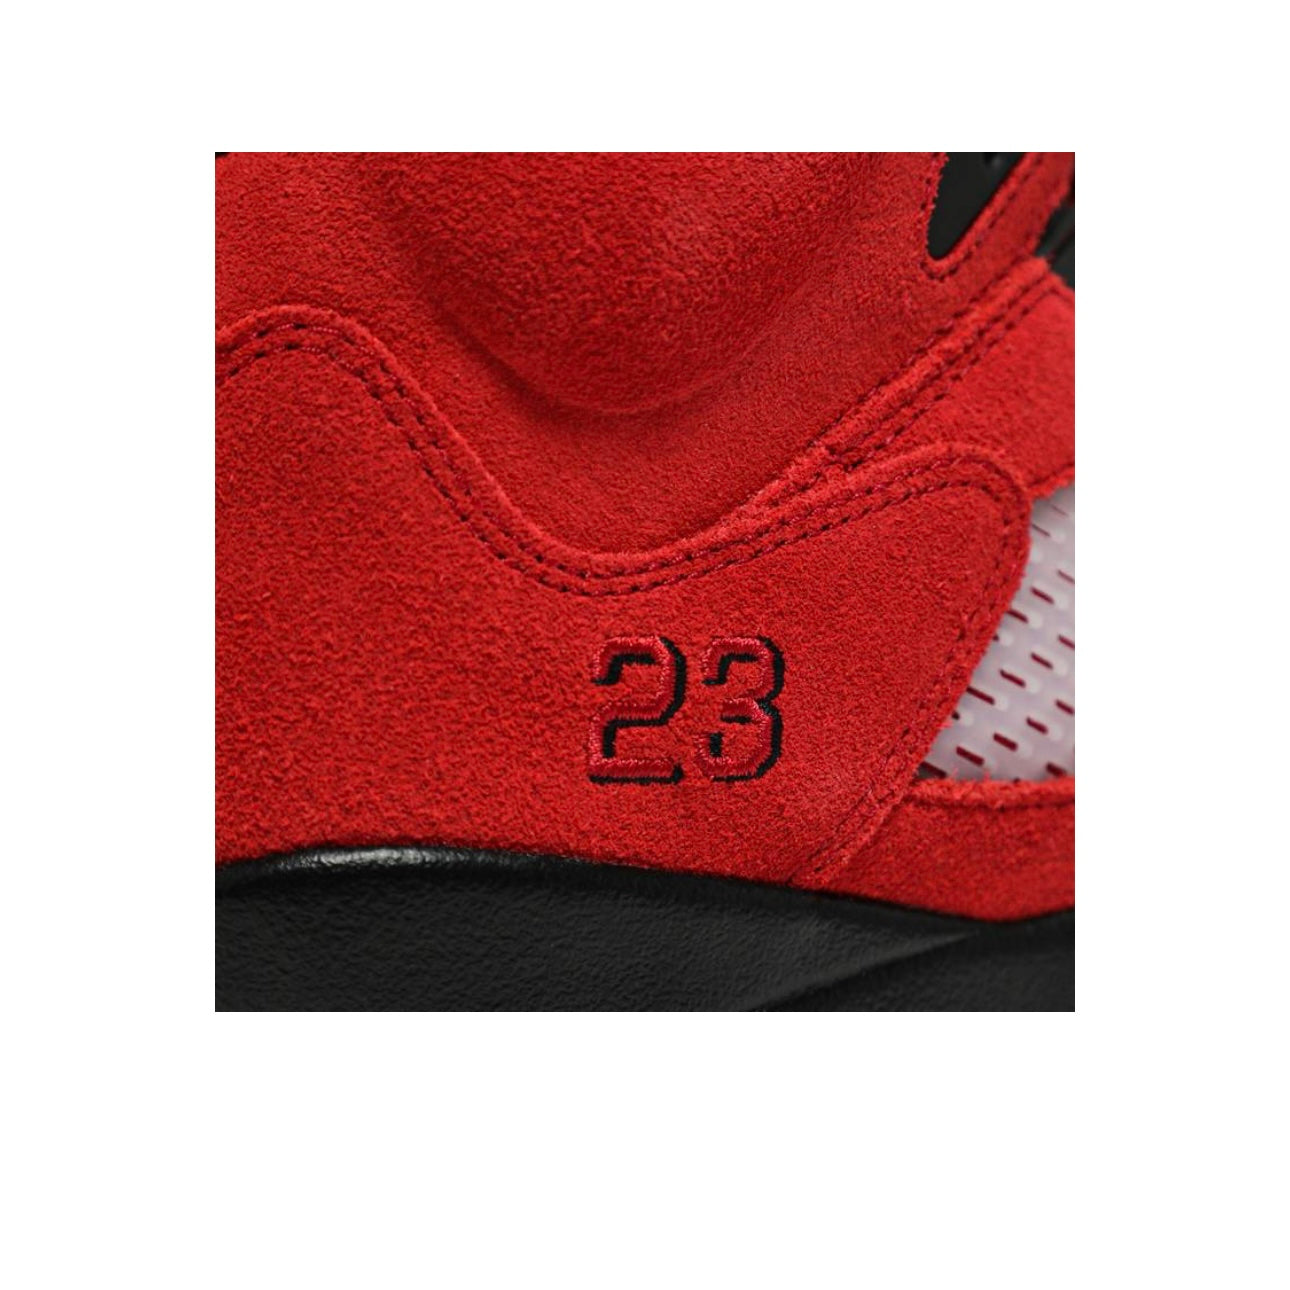 Size 11 - Air Jordan Retro 5 "Raging Bull"